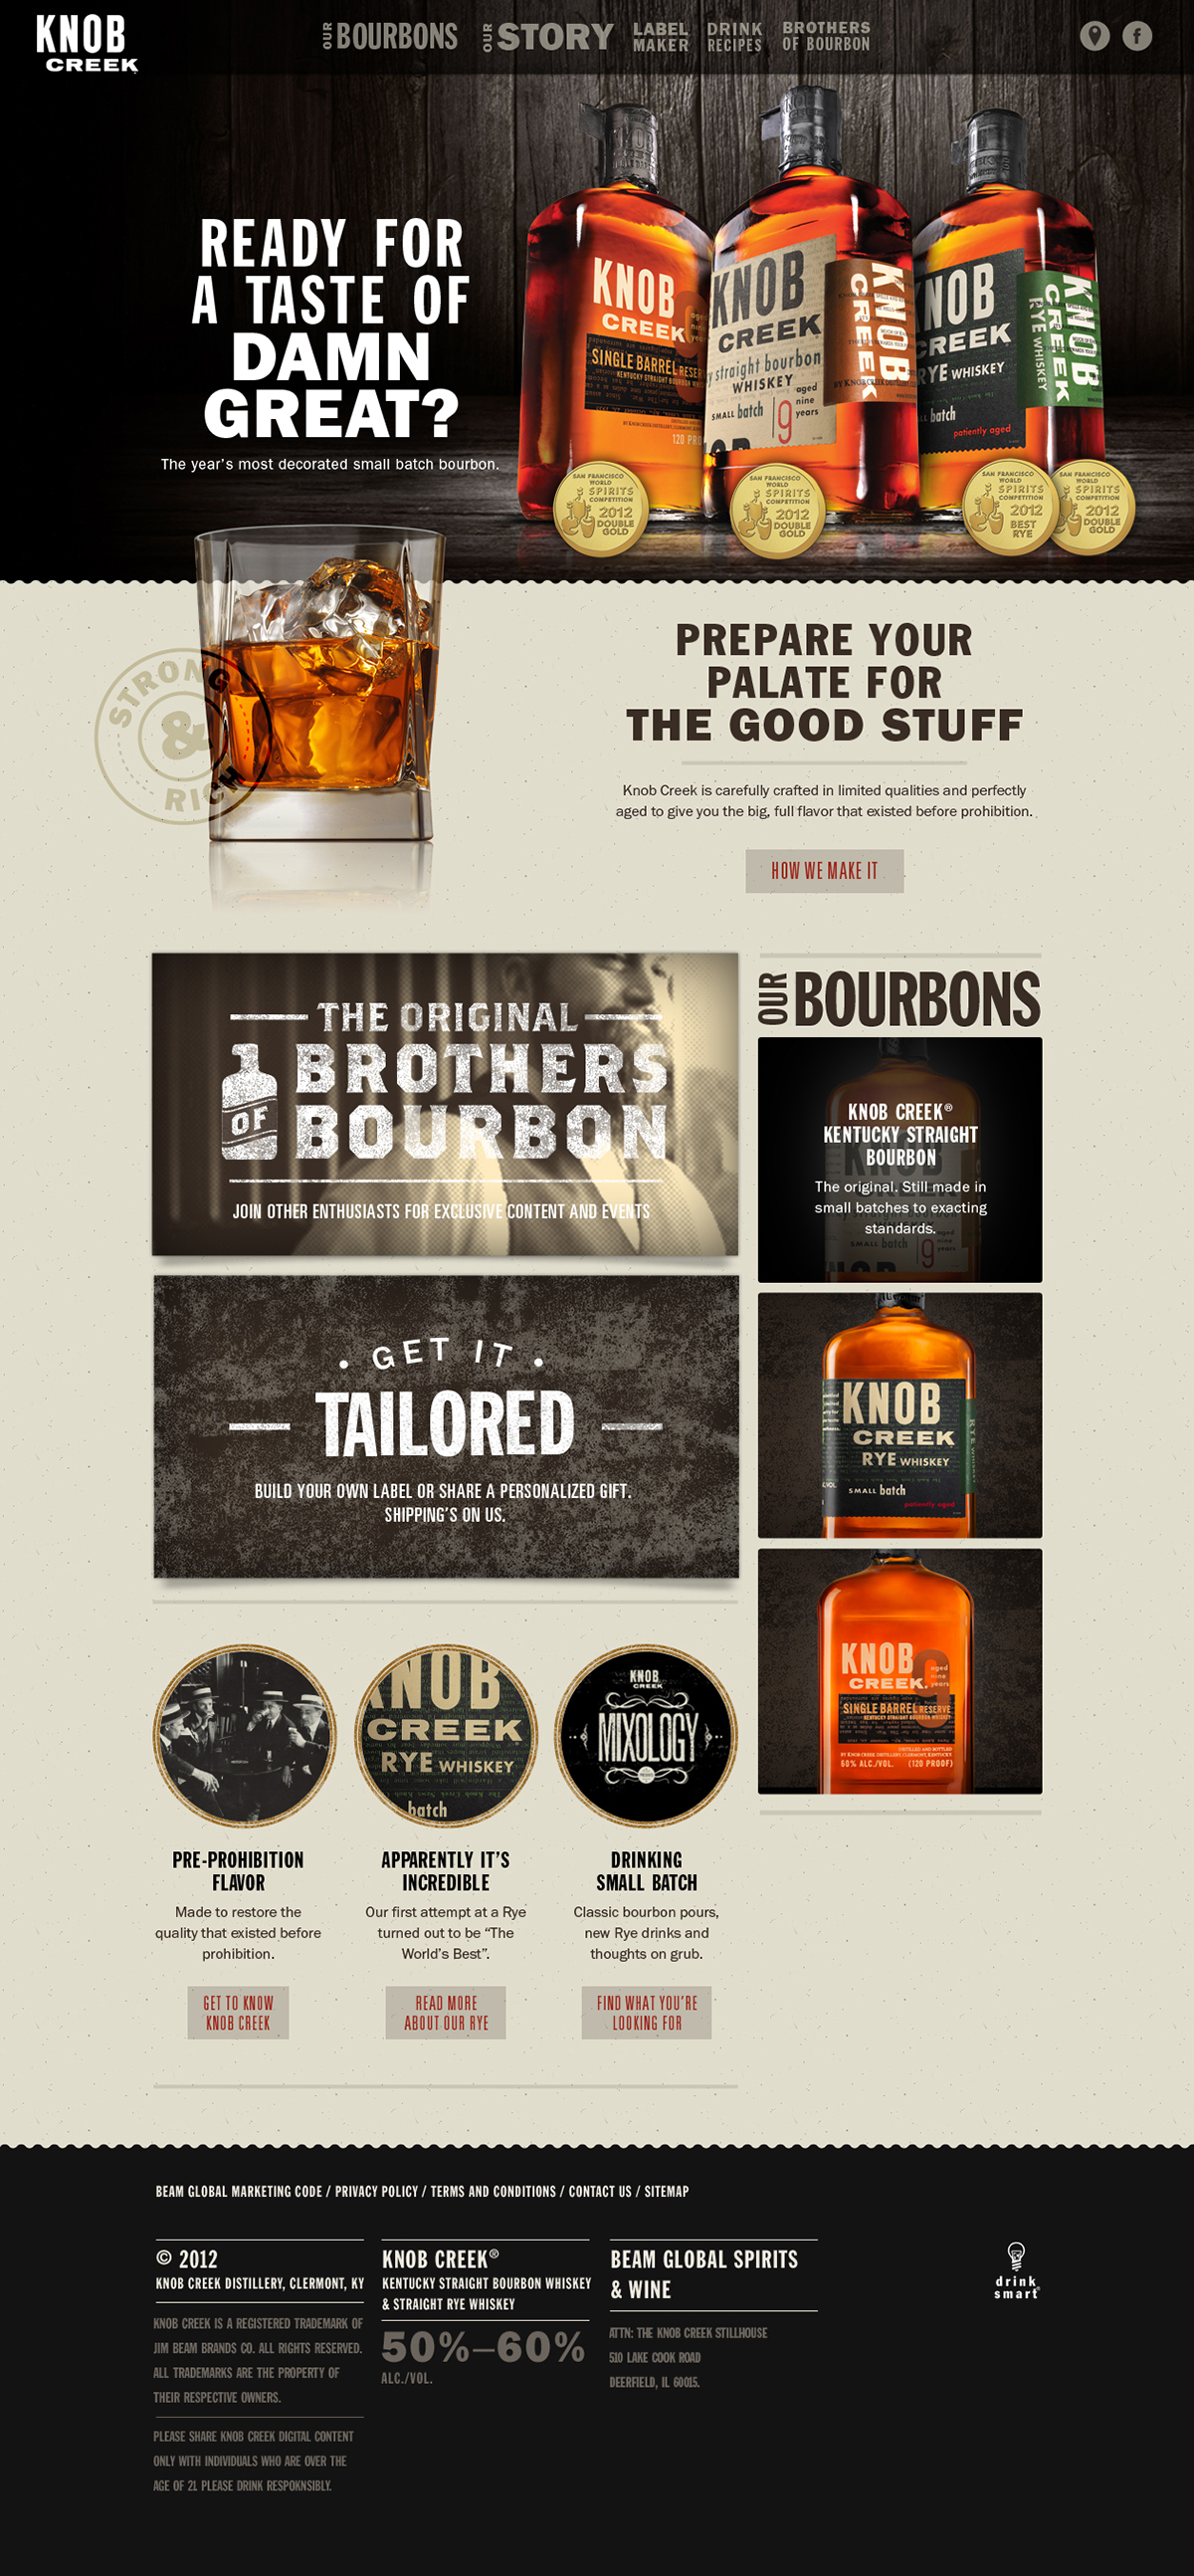 knob creek bourbon Responsive web design Collaboration